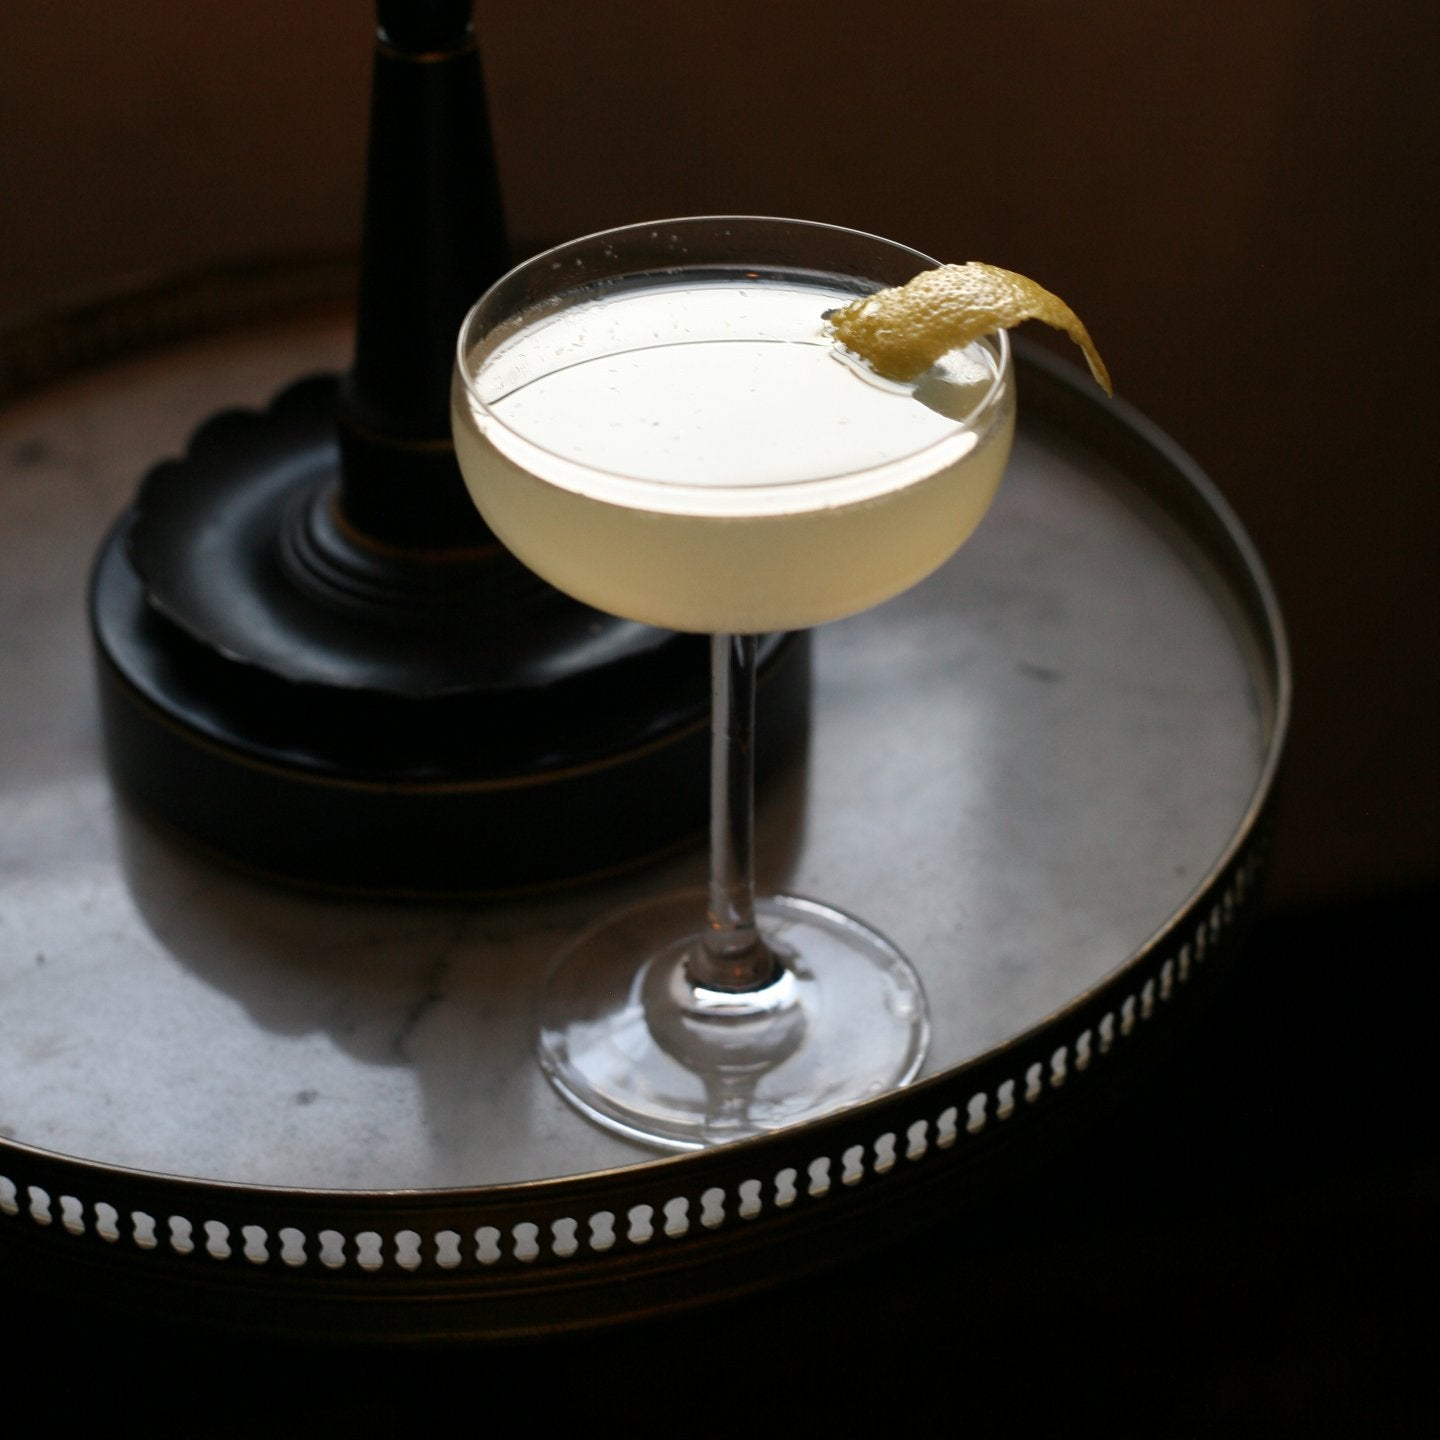 Twentieth Century cocktail with lemon twist.